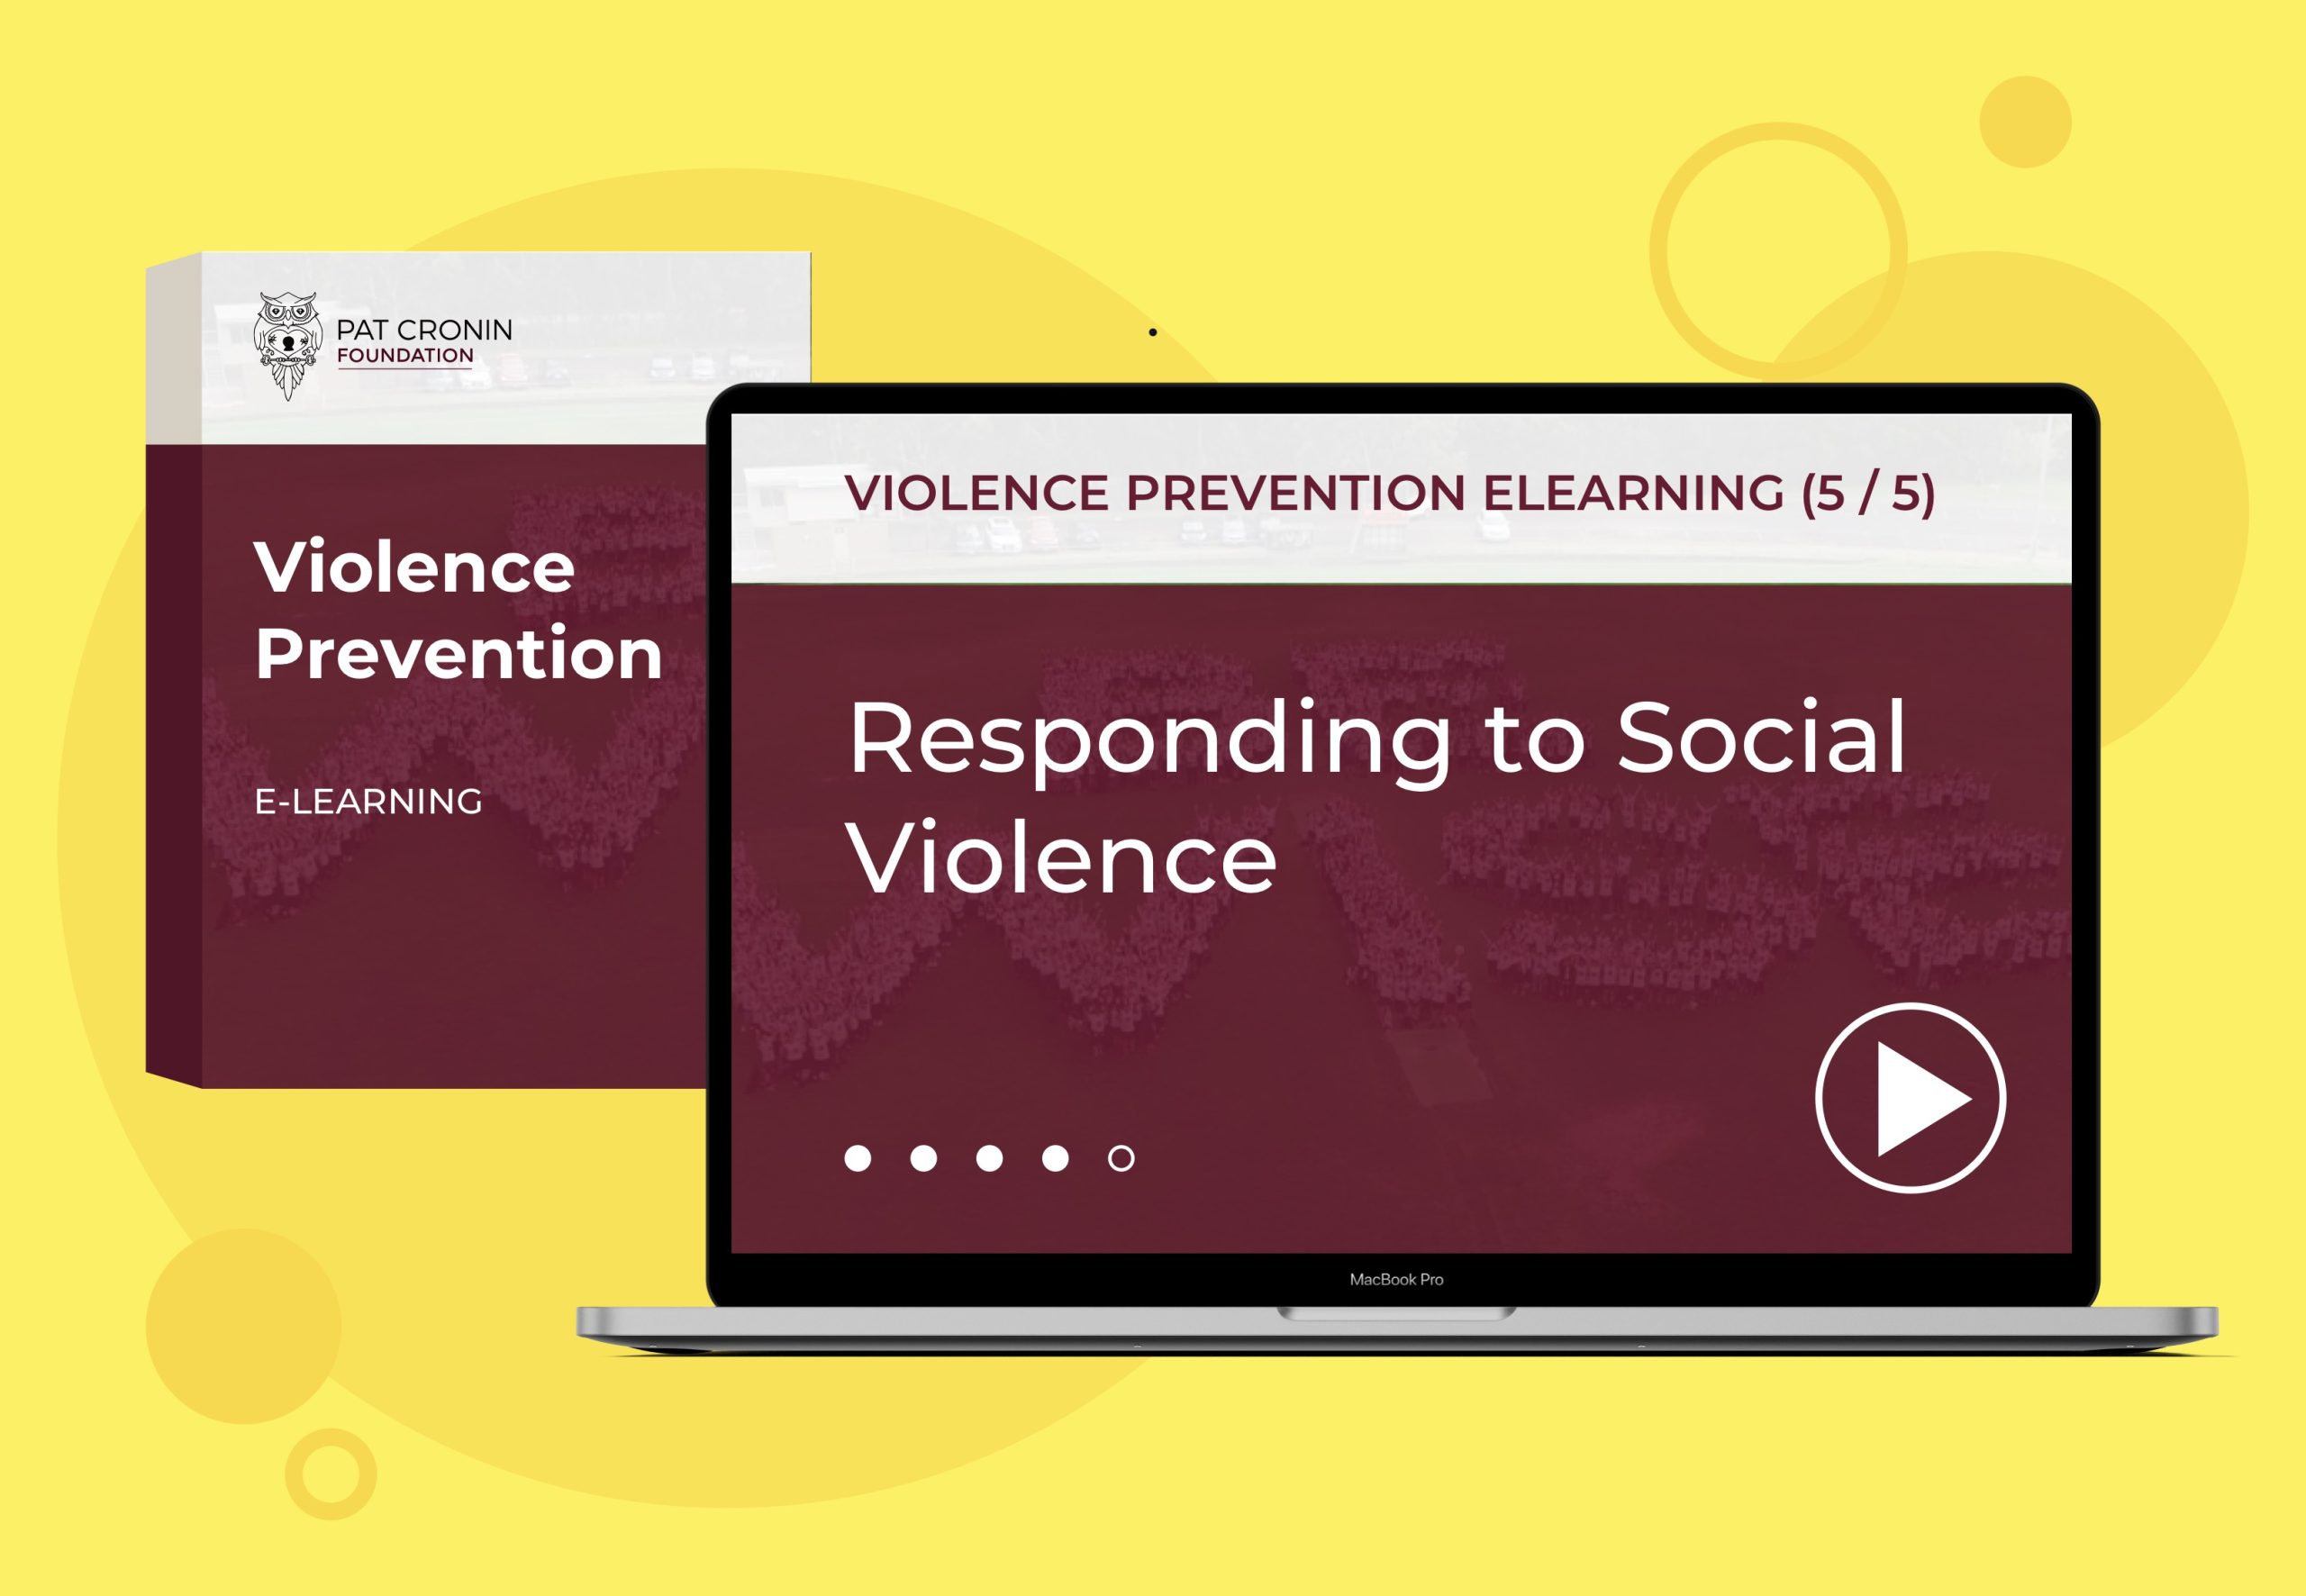 Responding to social violence